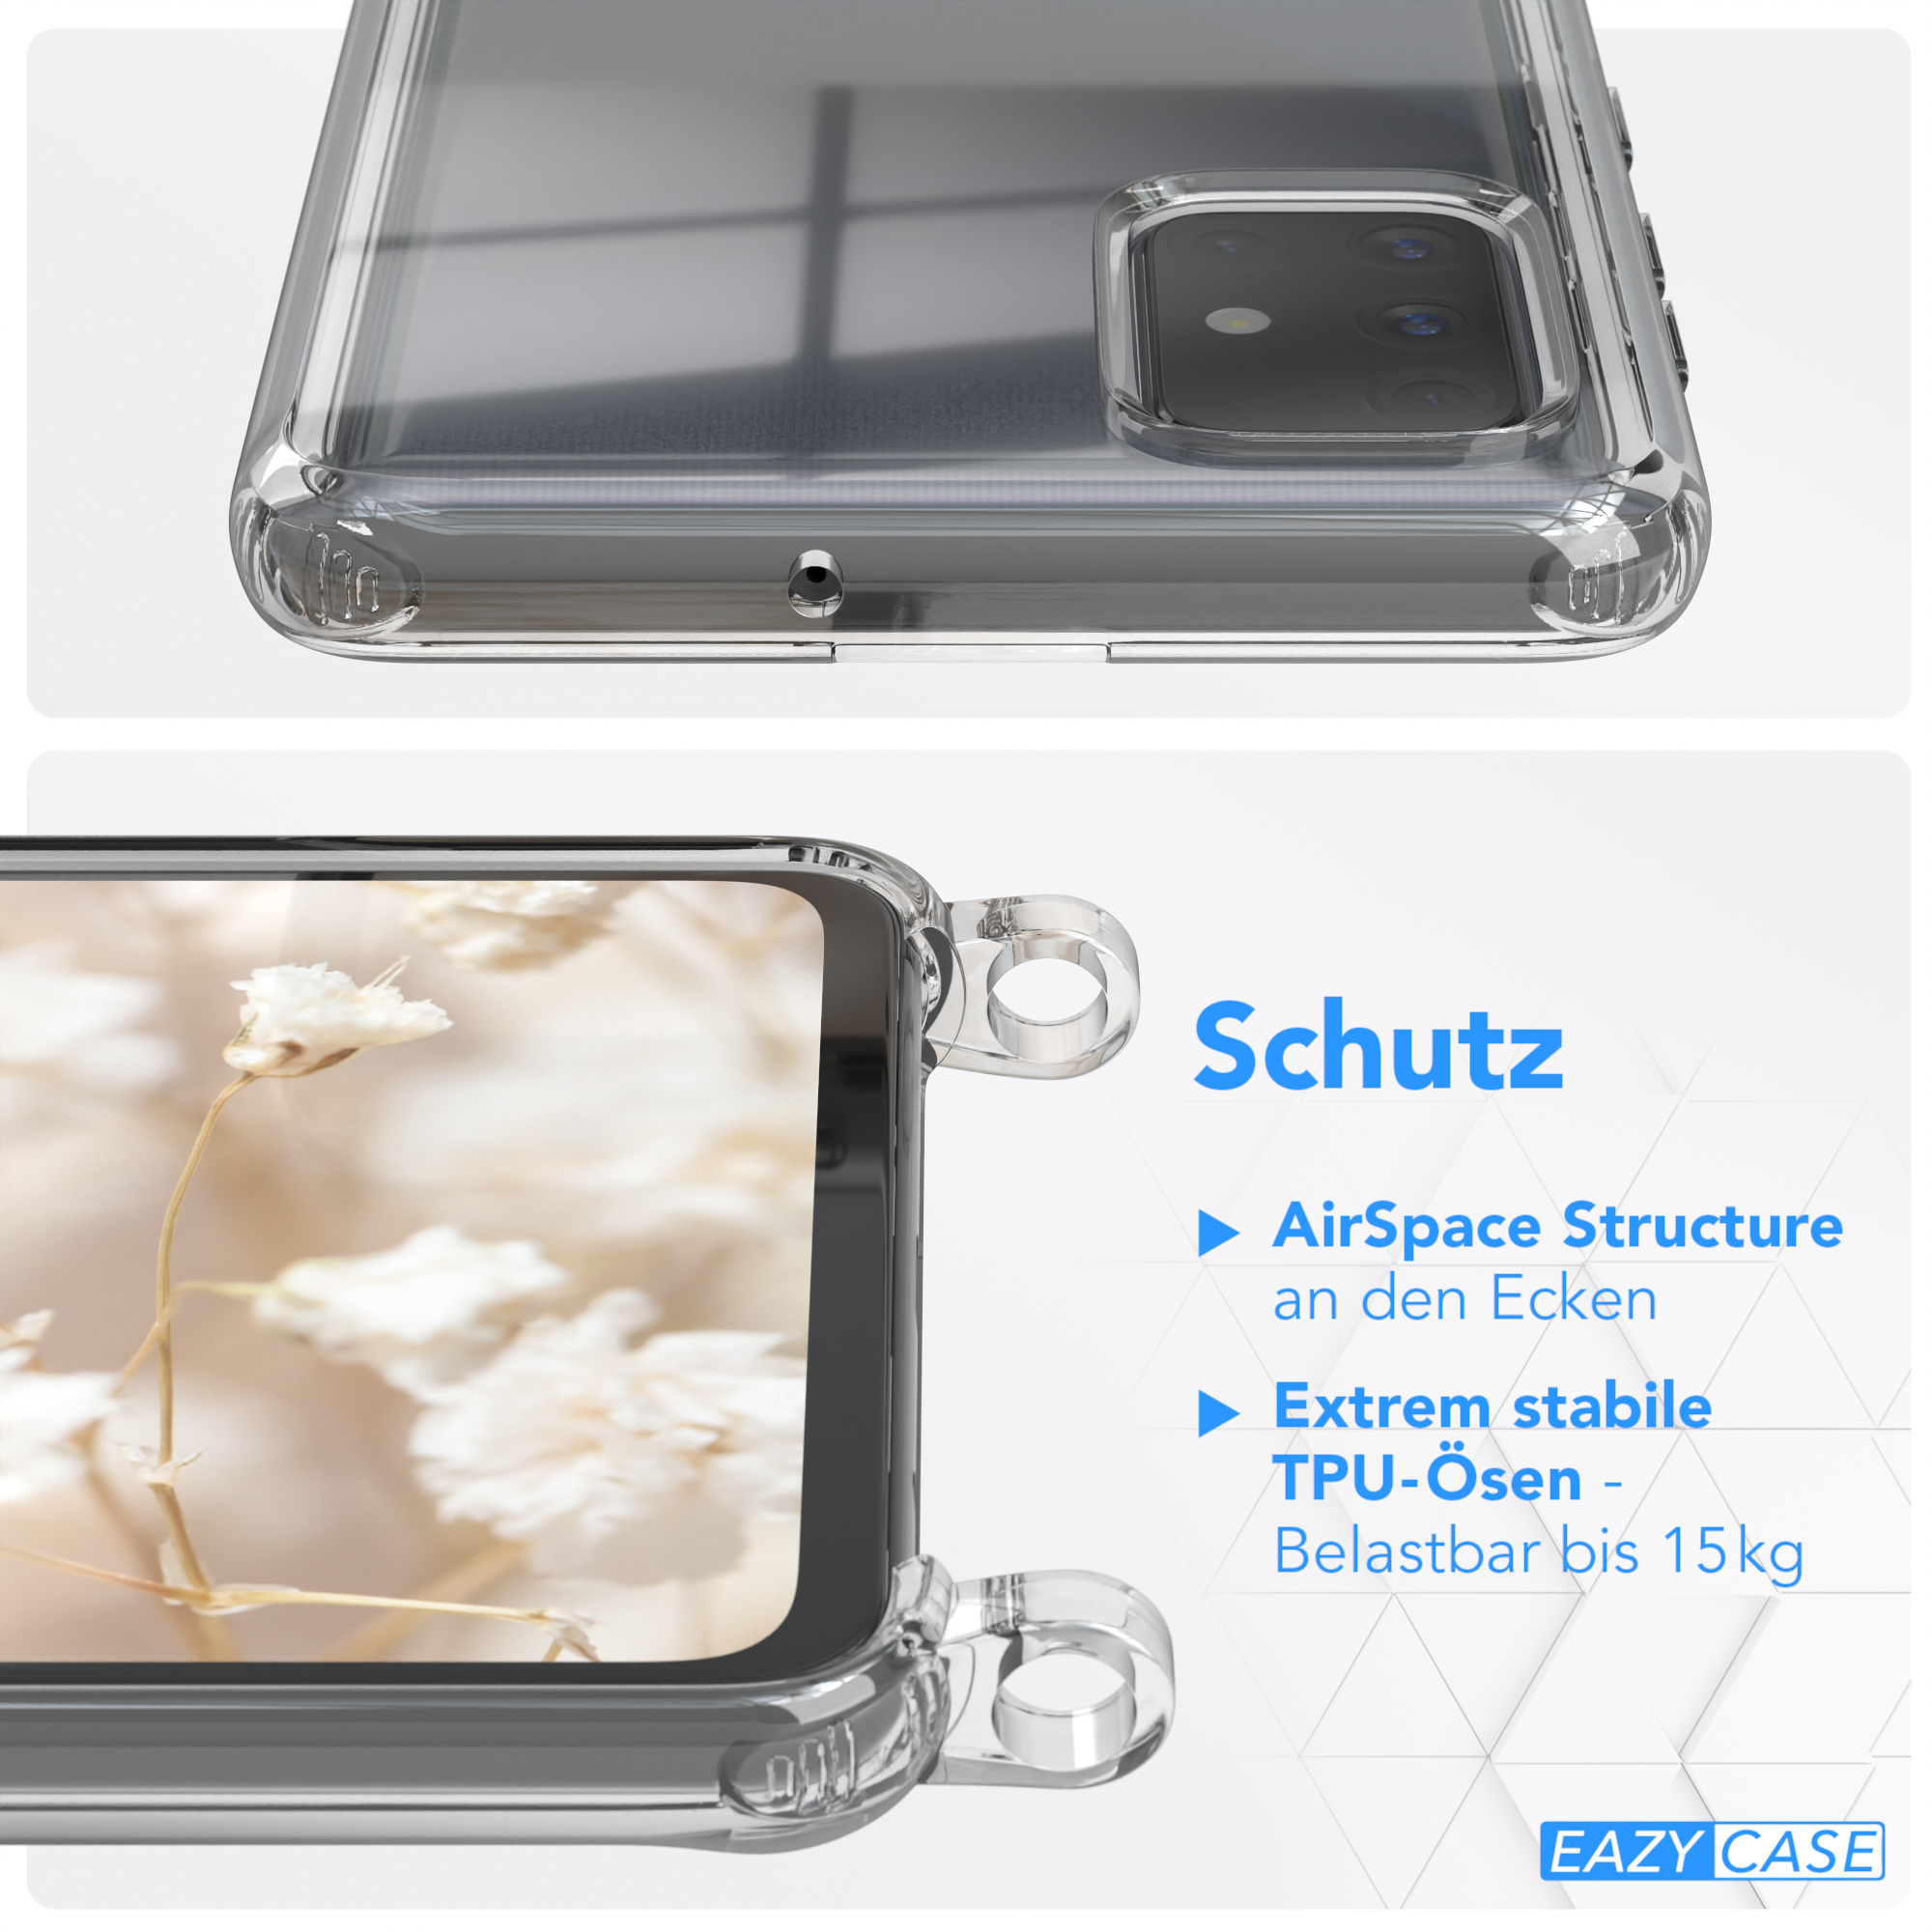 CASE Galaxy Handyhülle Umhängetasche, mit Transparente Kordel EAZY Braun Boho A71, Rot Samsung, / Style,